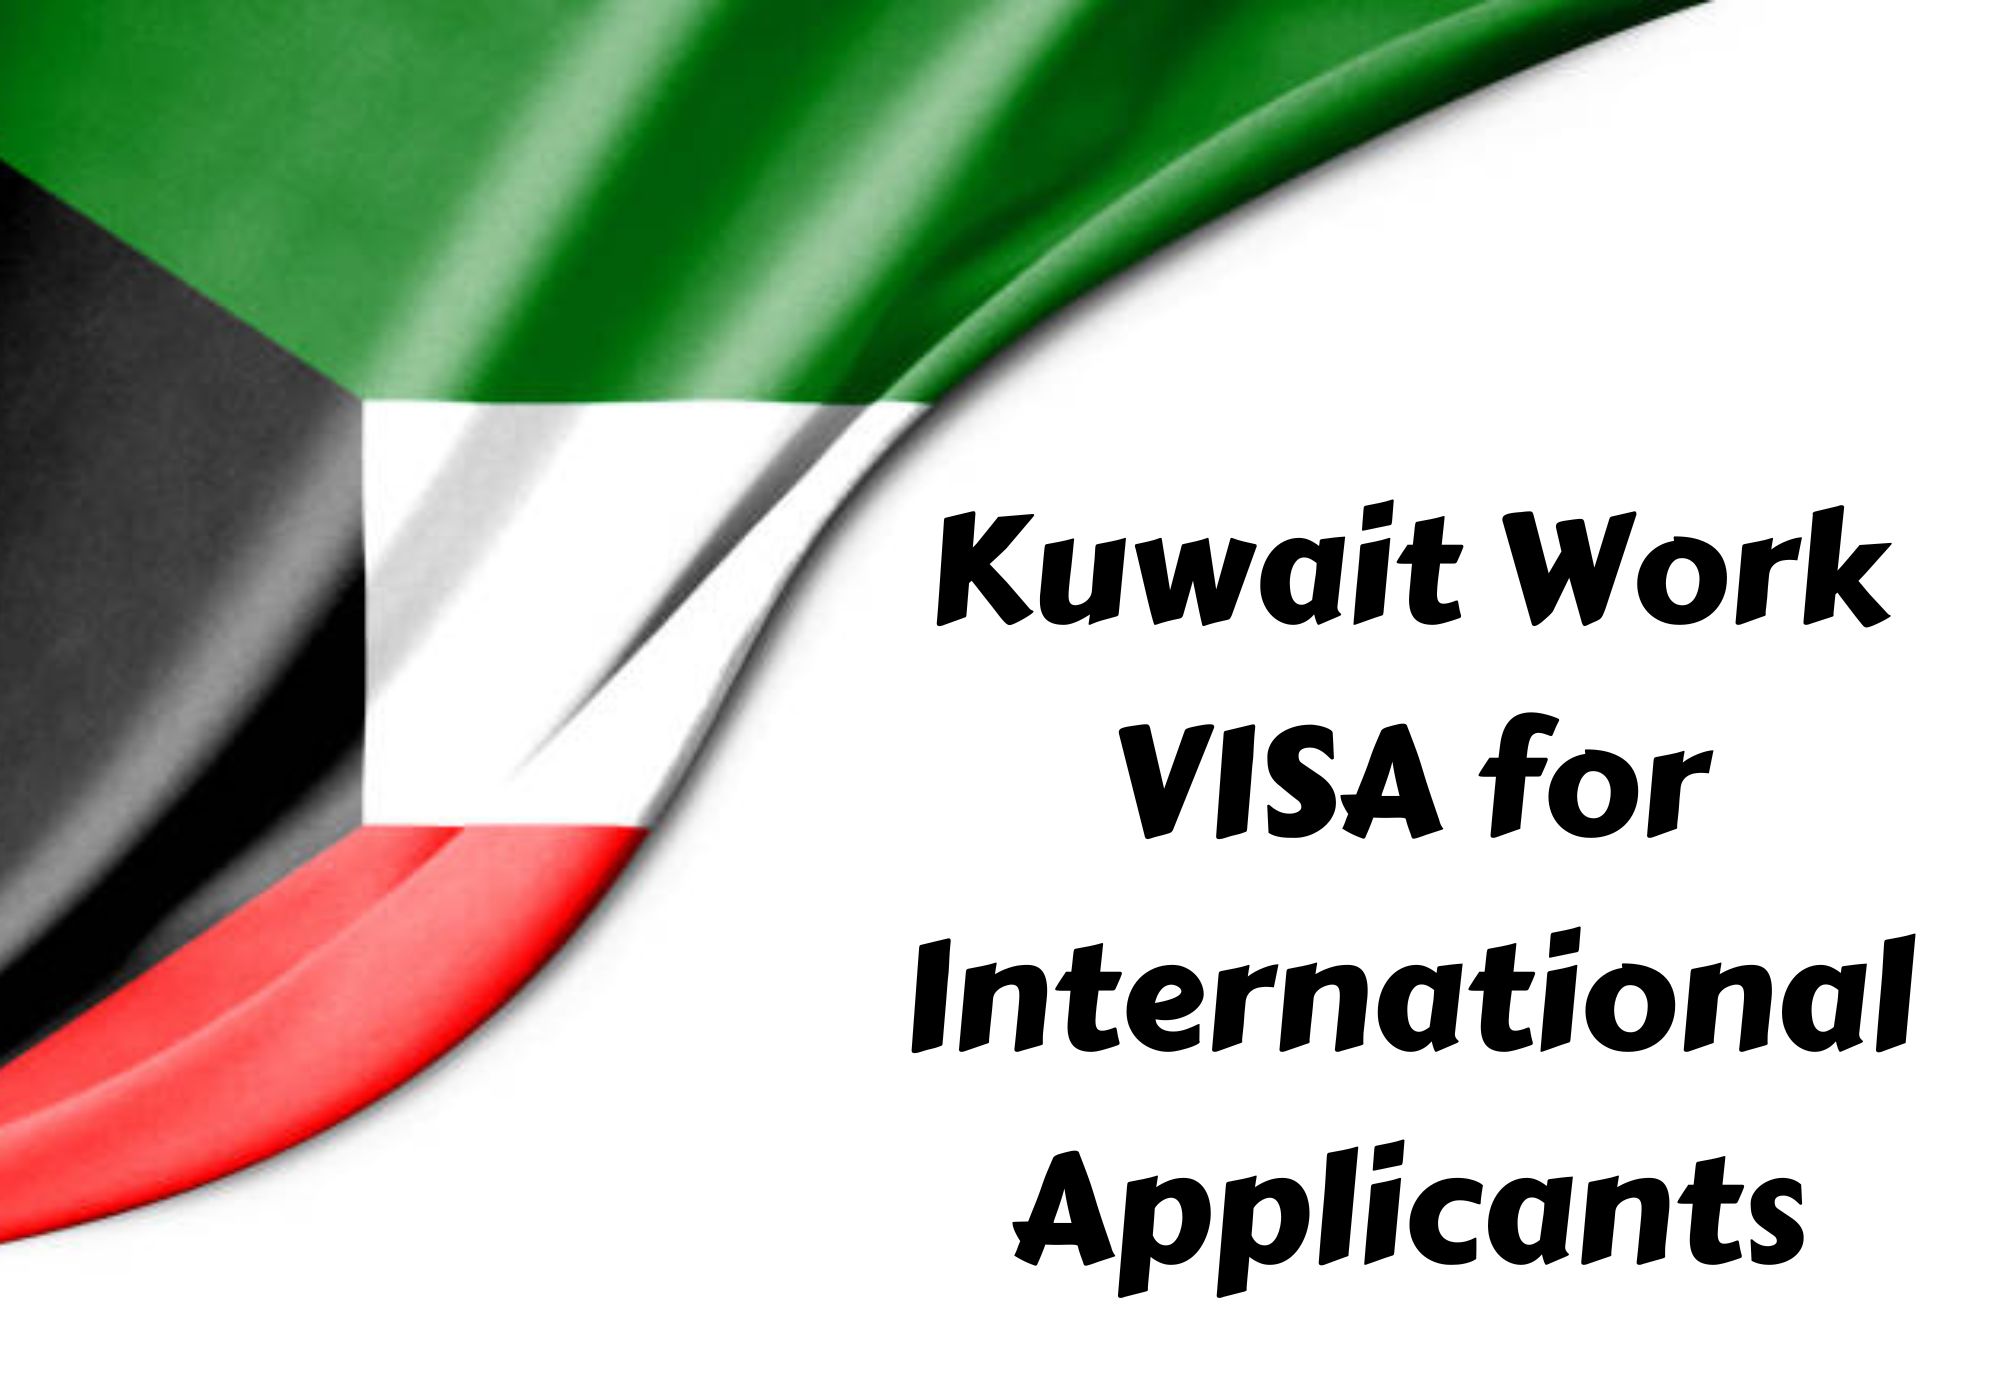 Kuwait Work VISA for International Applicants